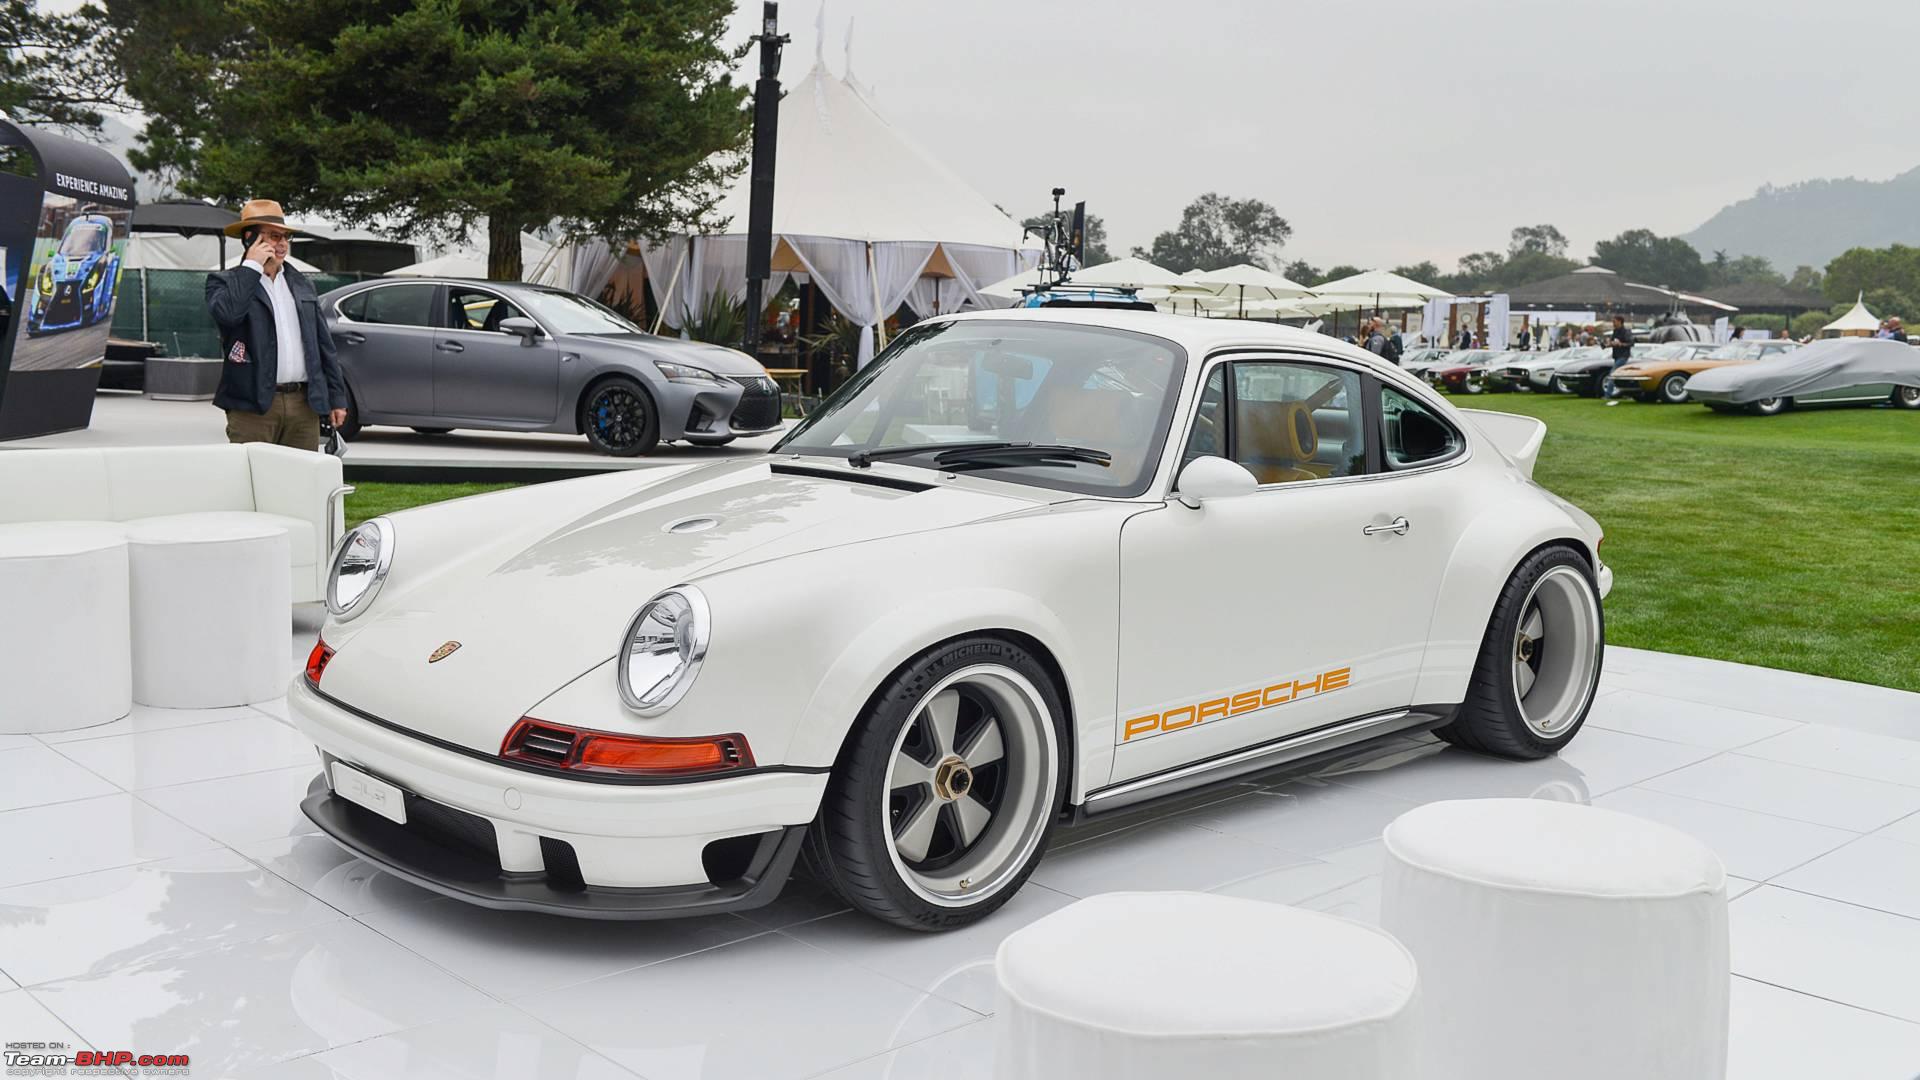 SingerWilliams' Porsche 911 DLS (Dynamics and